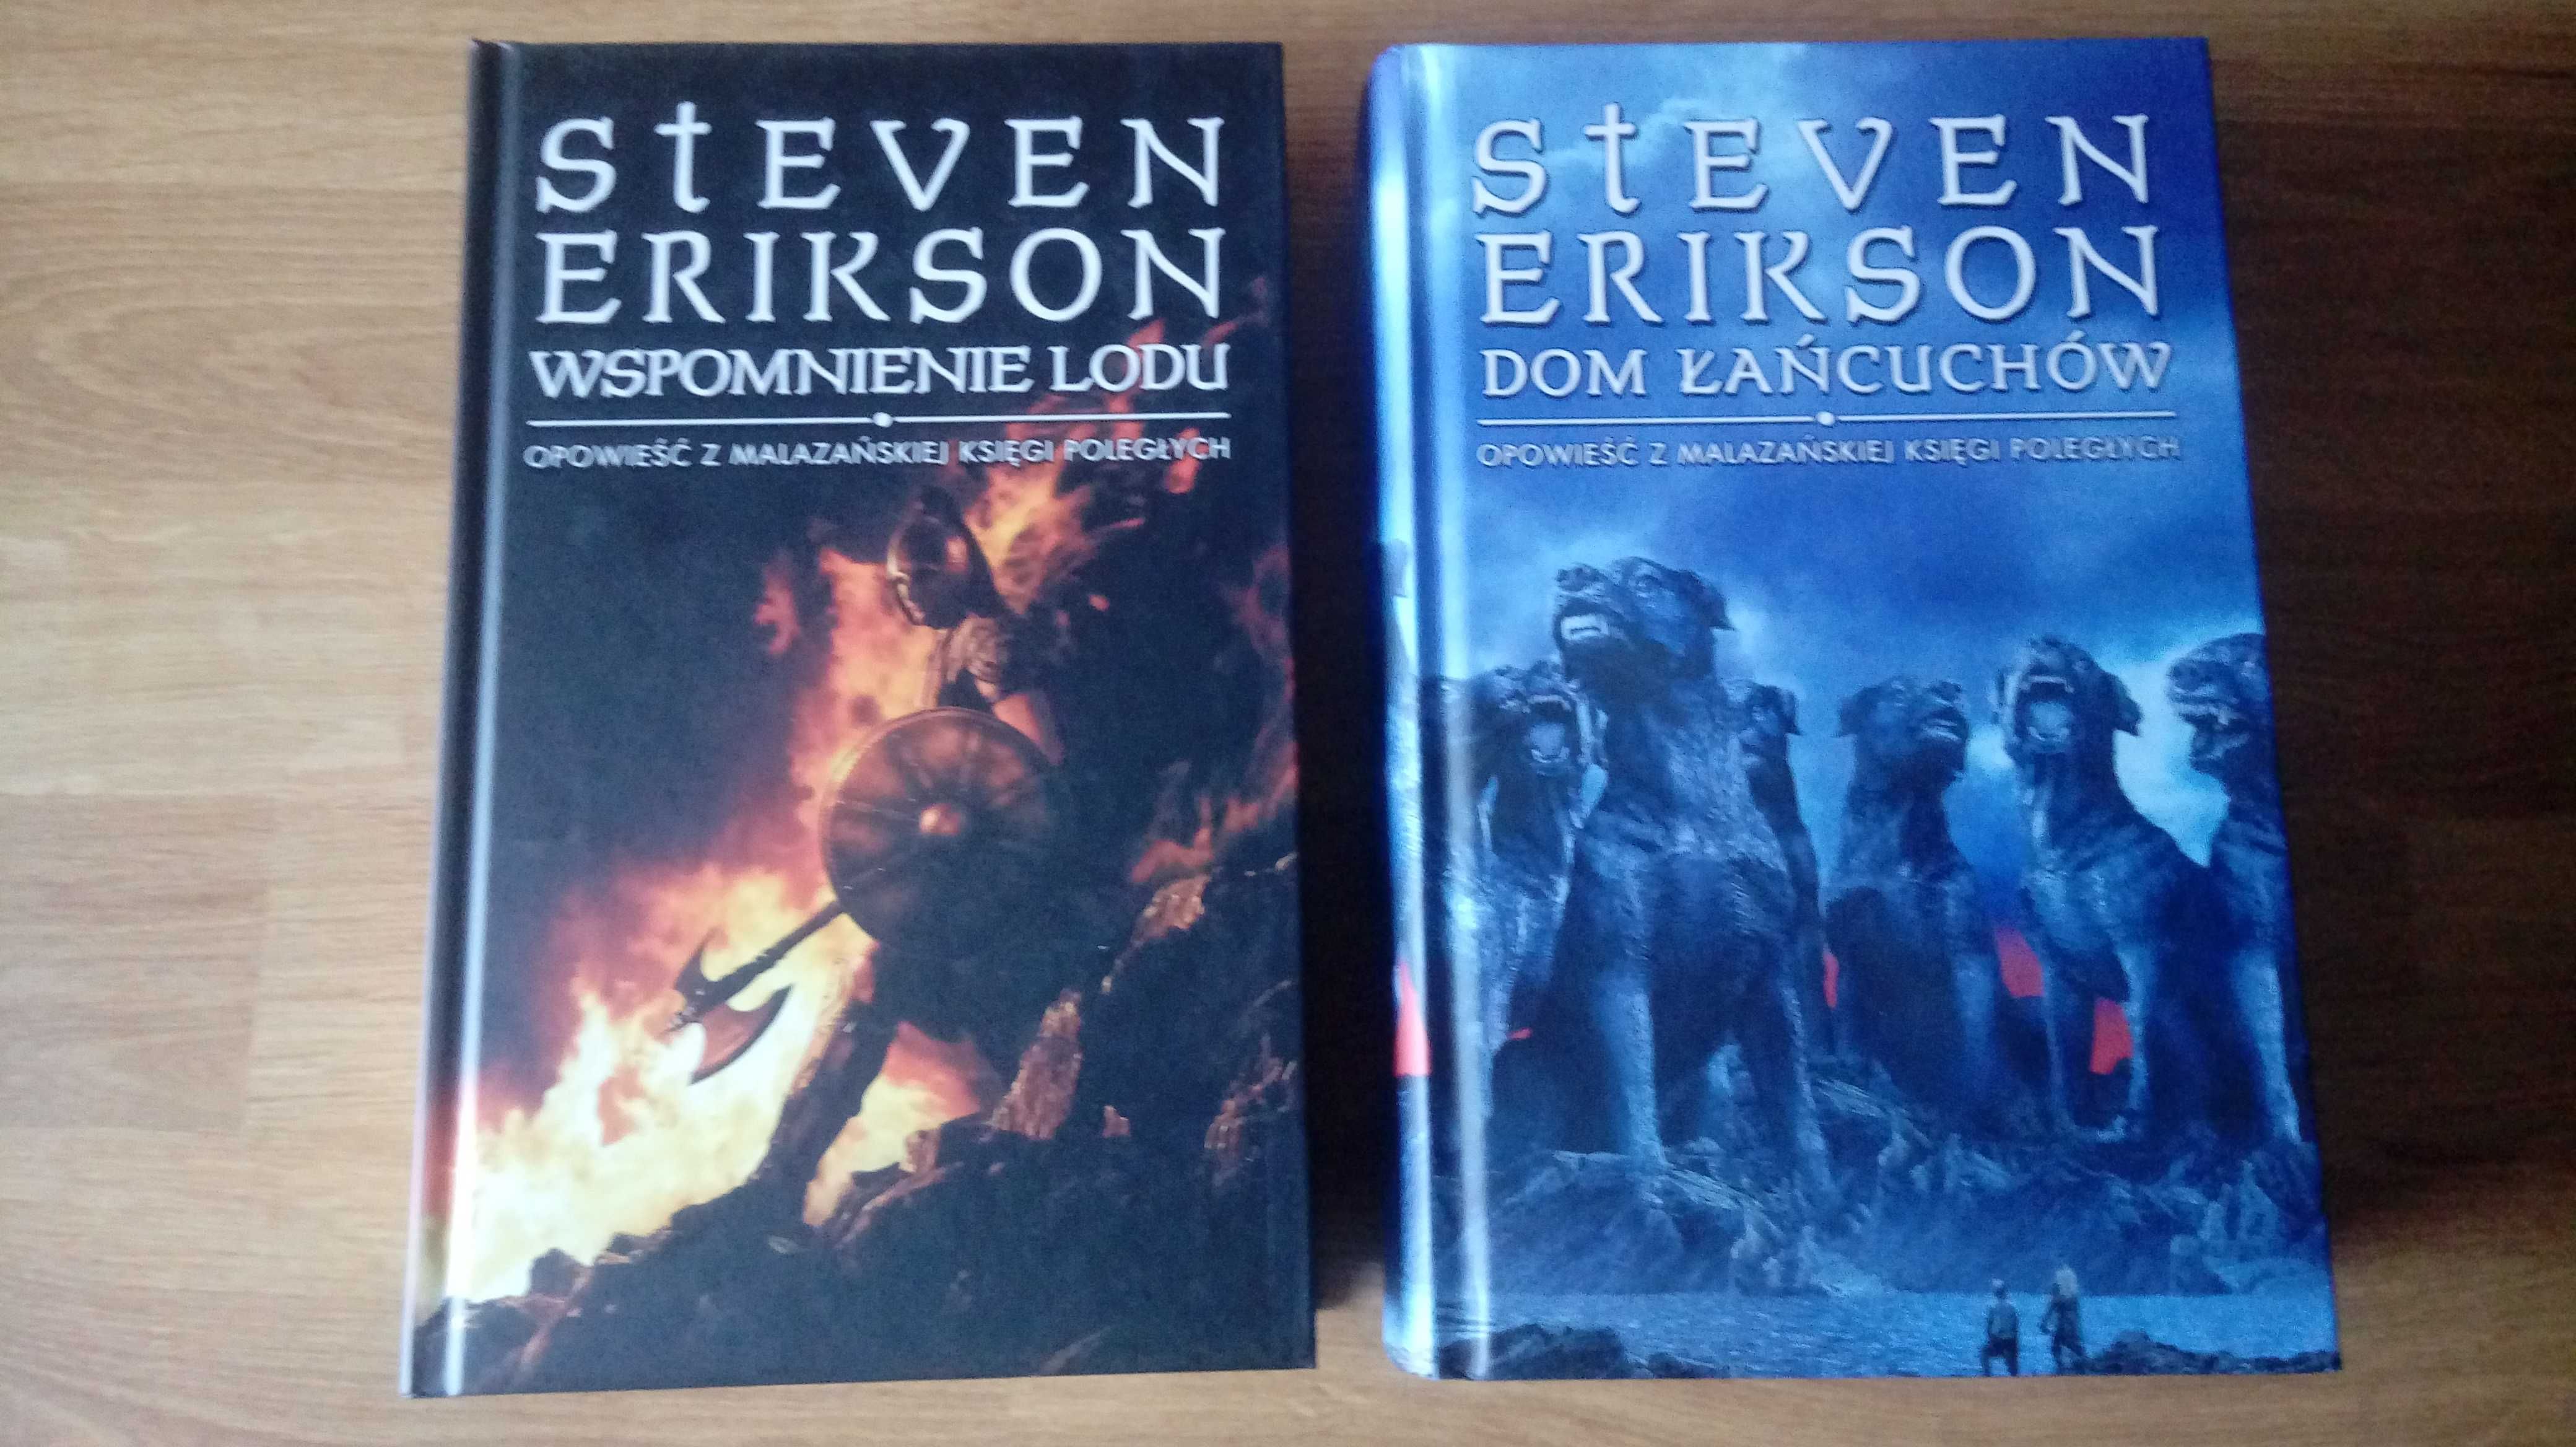 Steven Erikson: Malazańska Księga Poległych - kompletny cykl